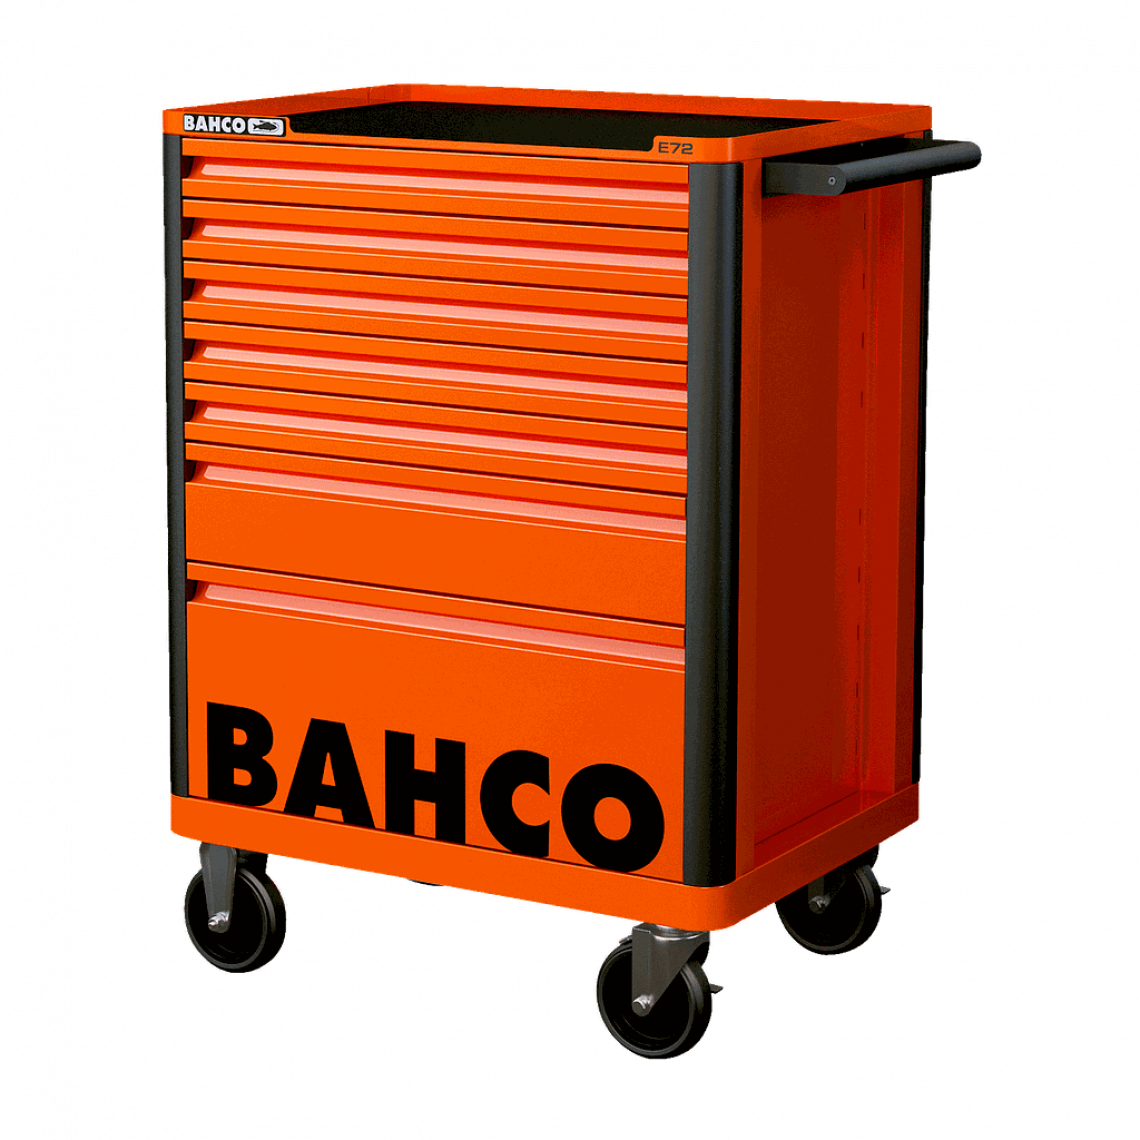 Bahco - Bahco - Servante > E72 66 cm avec 7 tiroirs Orange - 1472K7 - Armoires